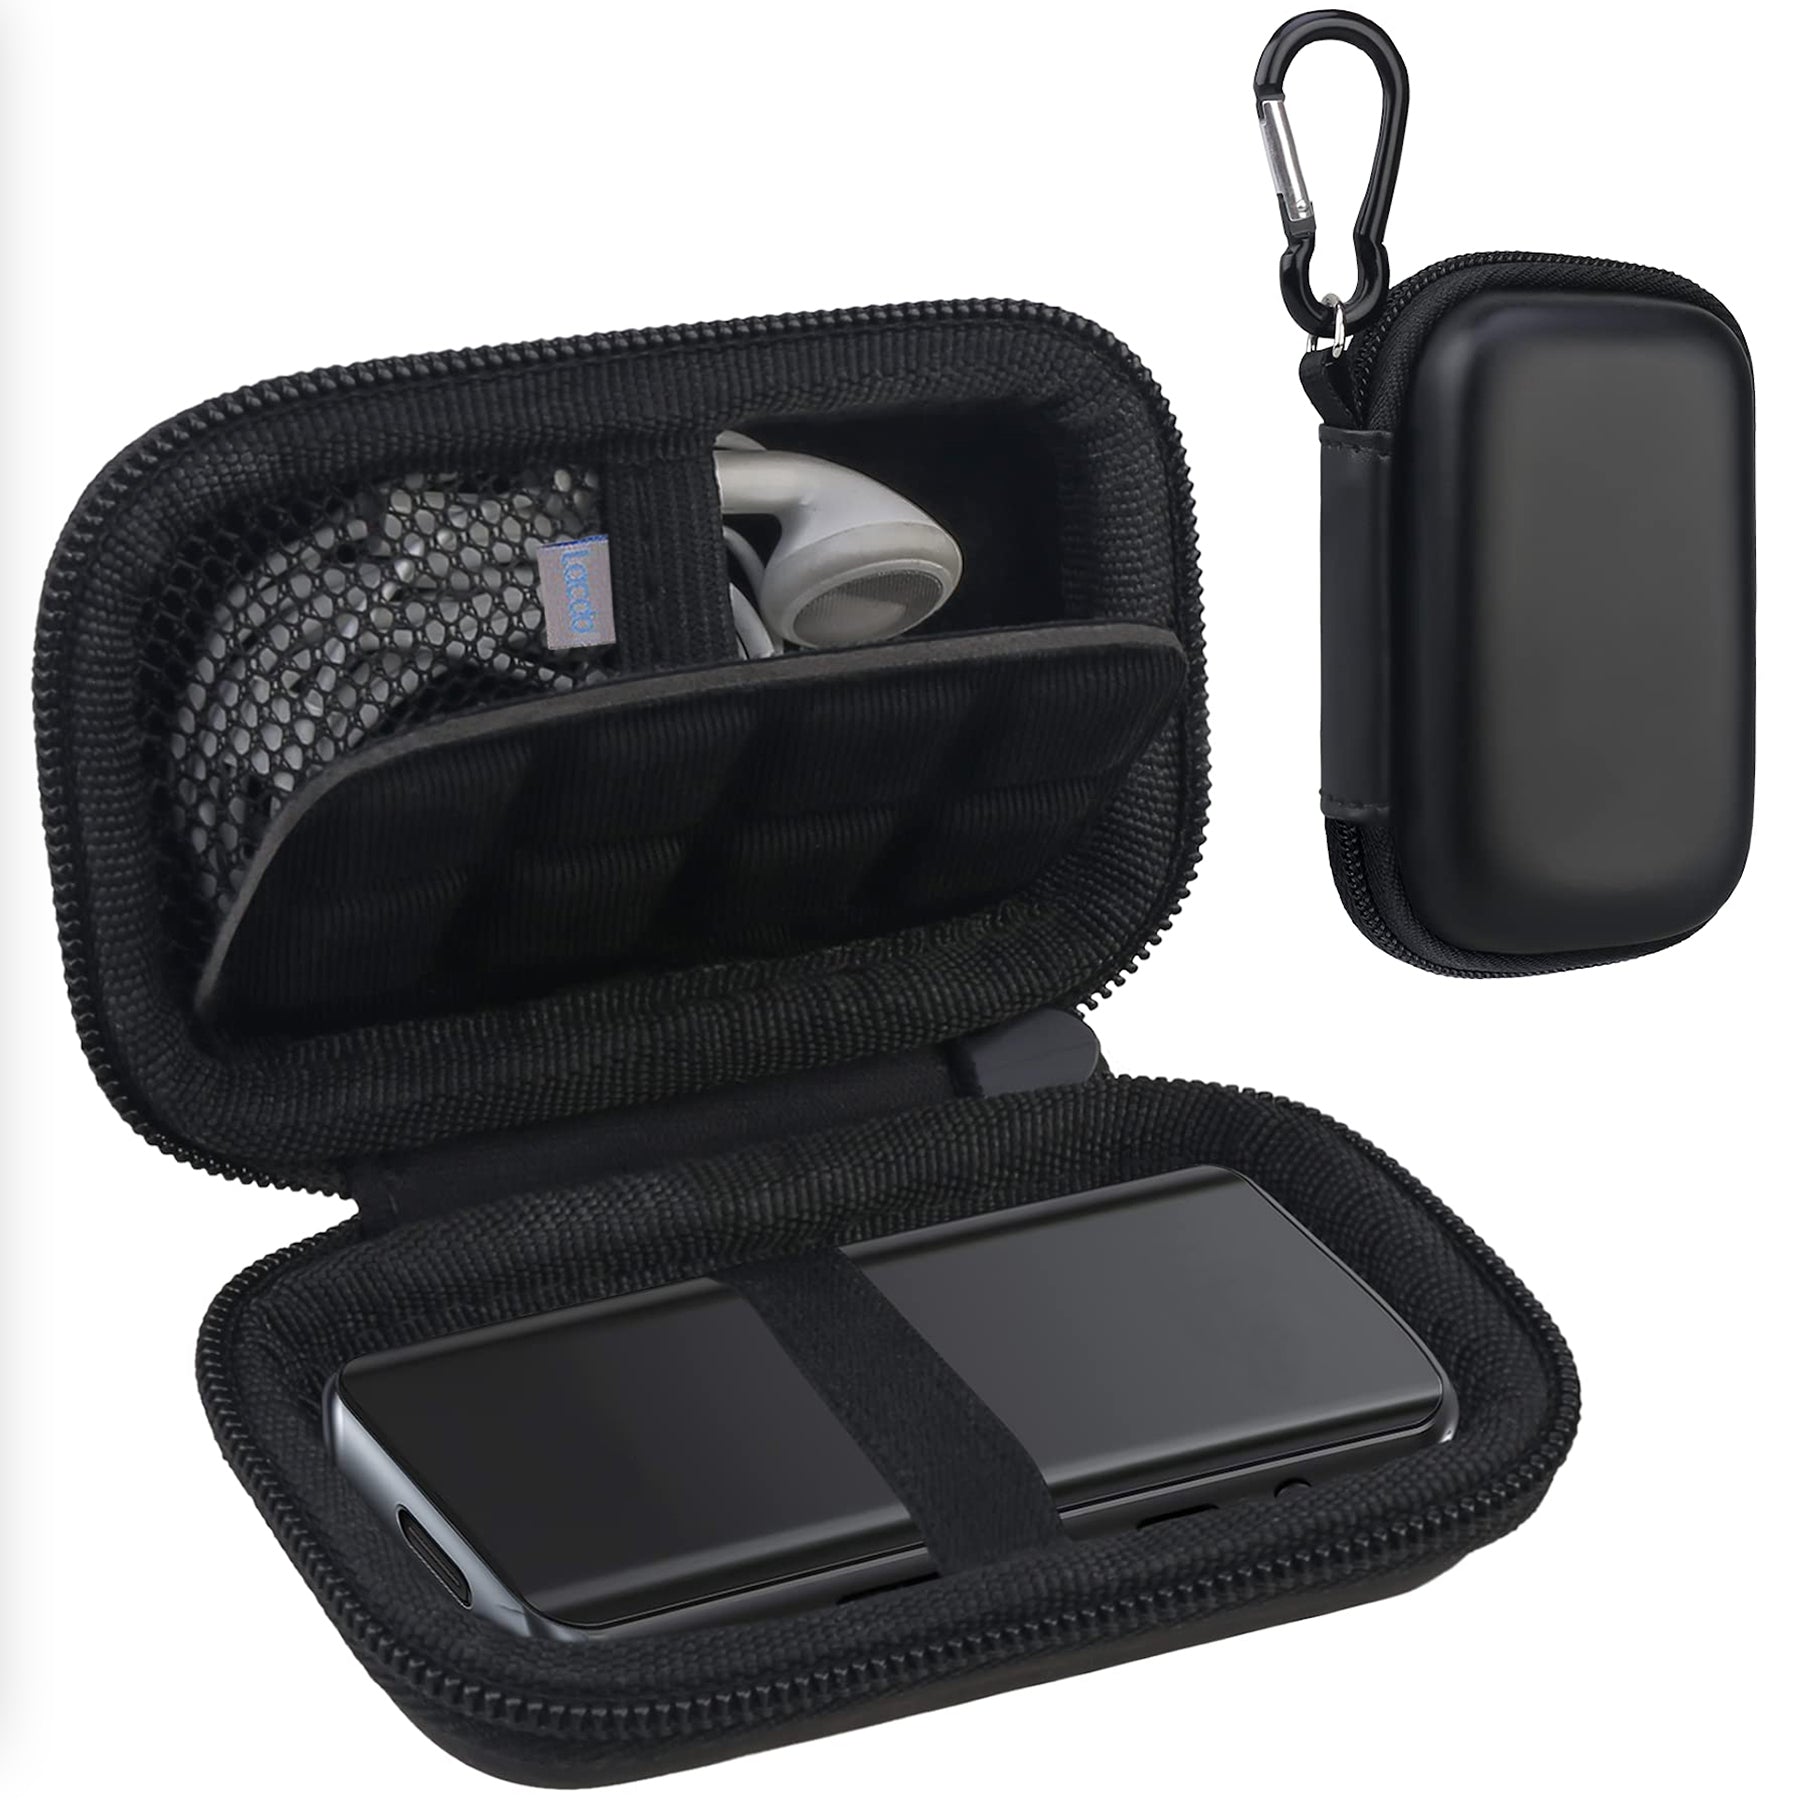 Lacdo EVA Carrying Case Portable Travel Bag Shockproof